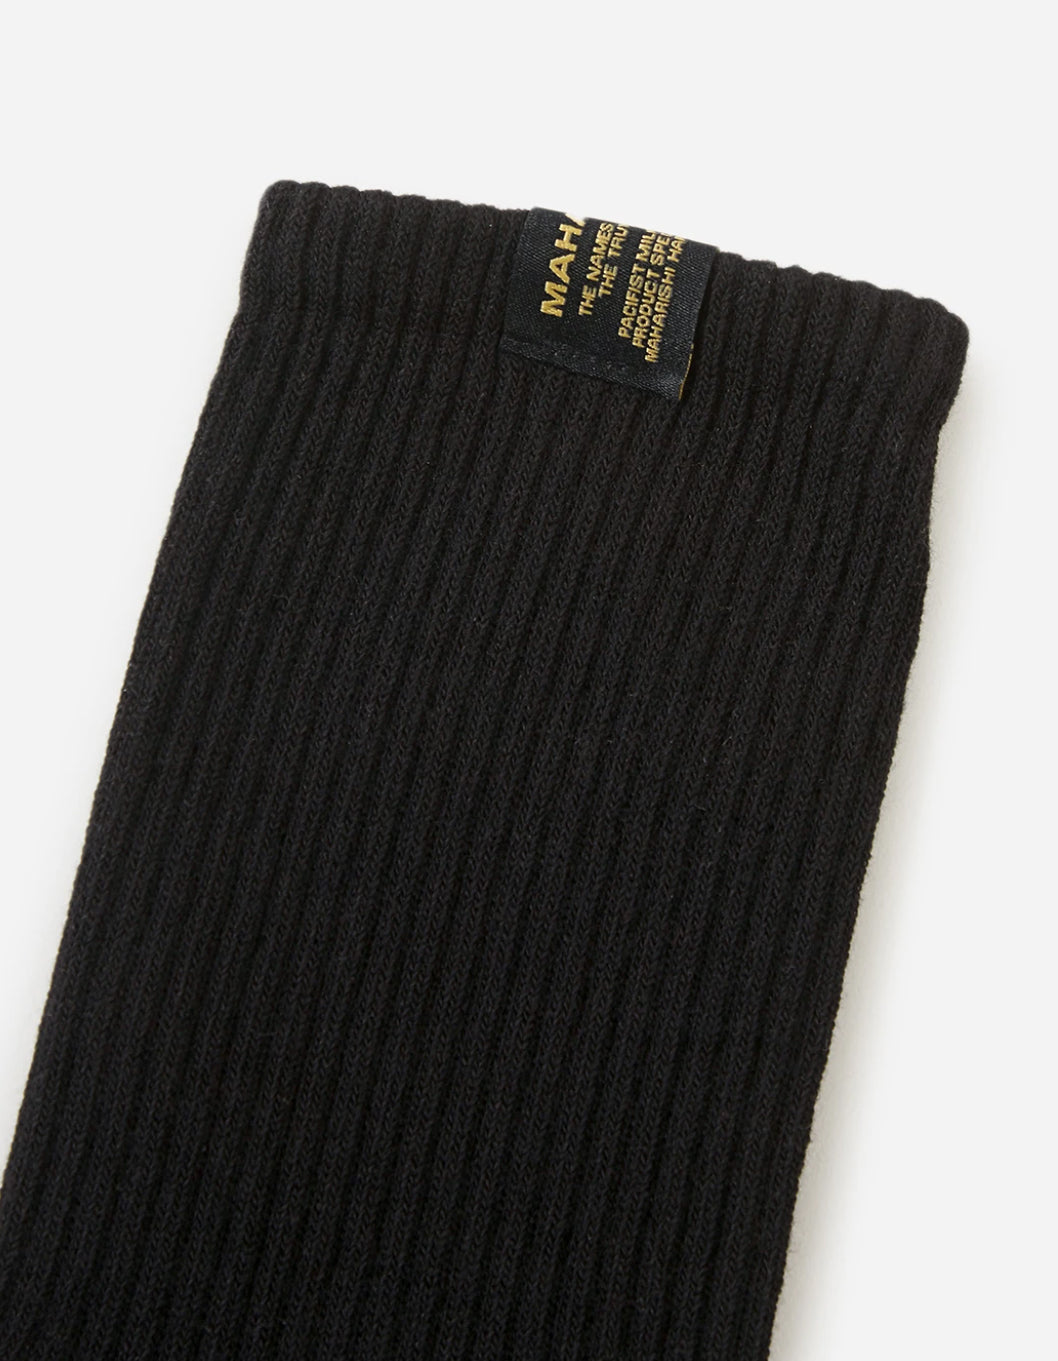 9273 MILTYPE Sport Sock · 3 Pack Black/Black/Black